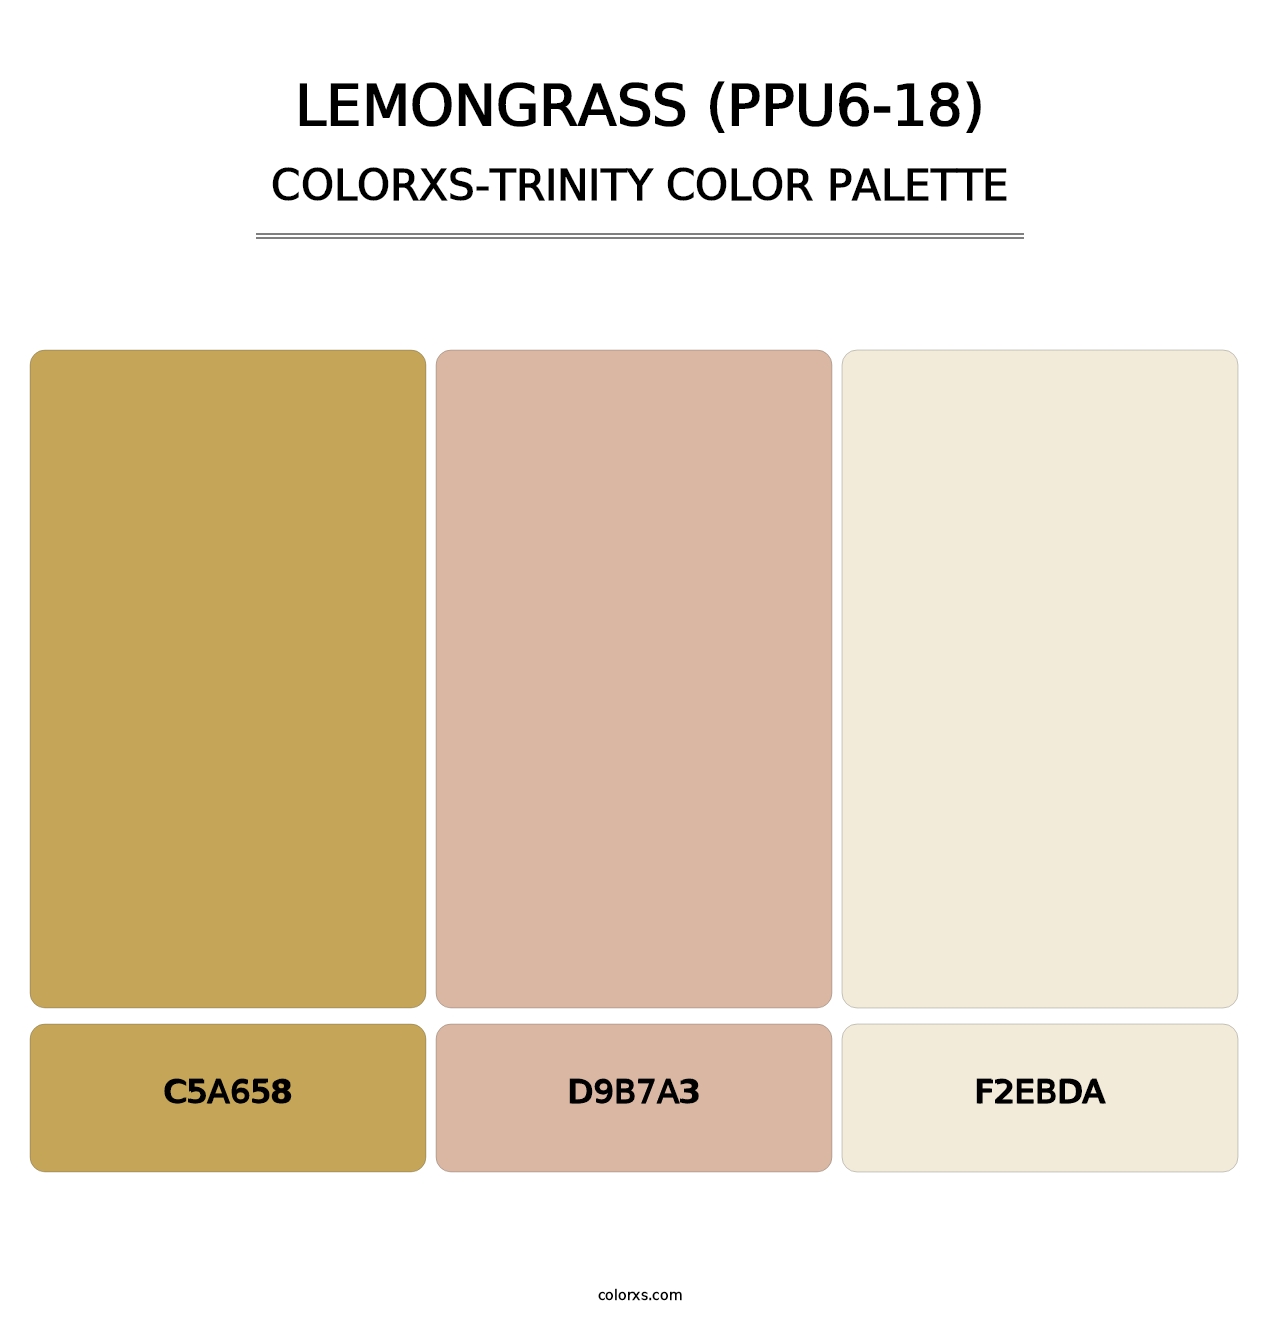 Lemongrass (PPU6-18) - Colorxs Trinity Palette